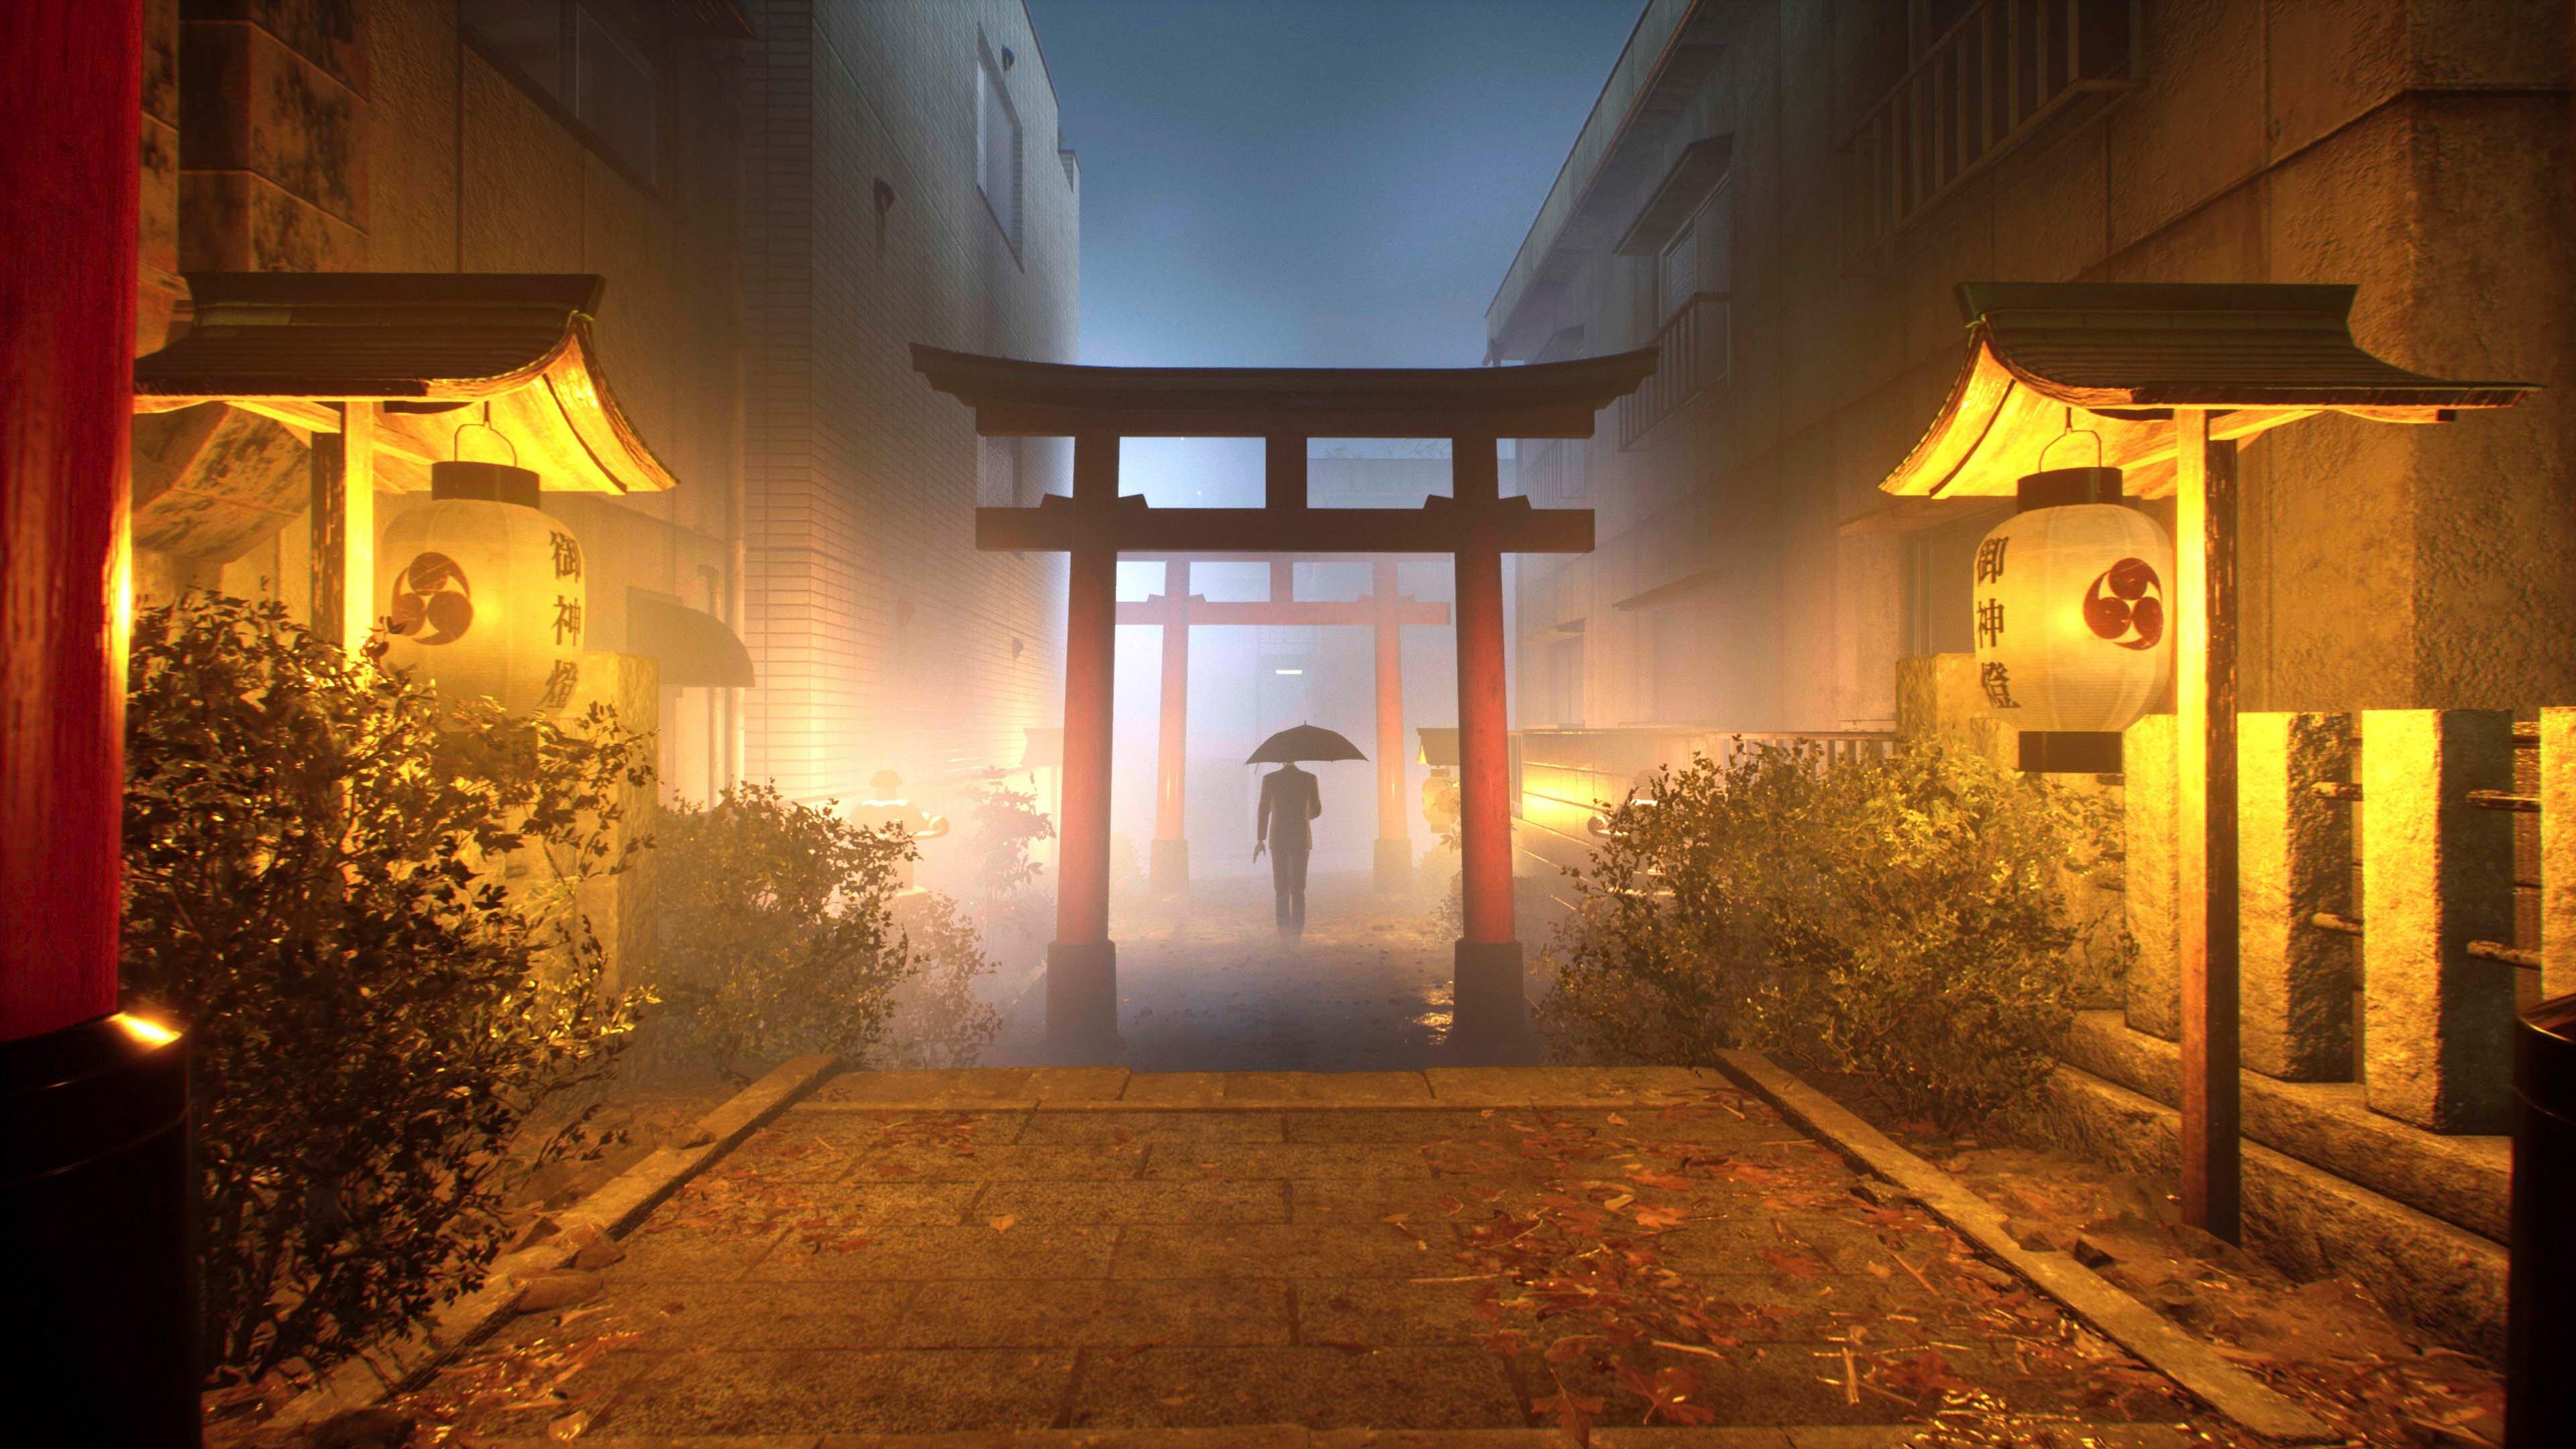 Ghostwire: Tokyo Standard Edition - PC